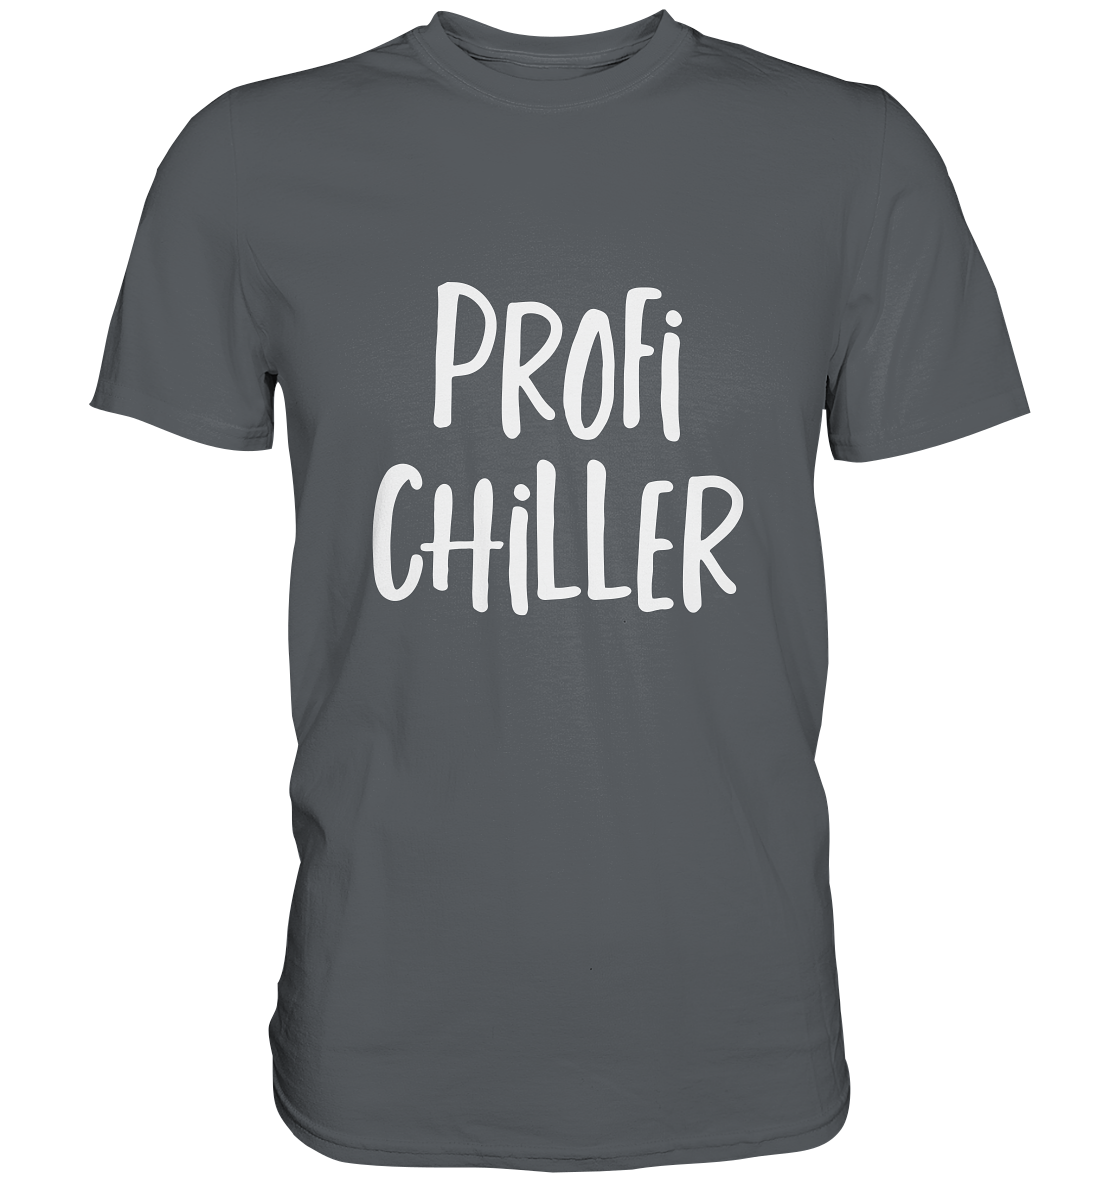 Profi Chiller - Premium Shirt